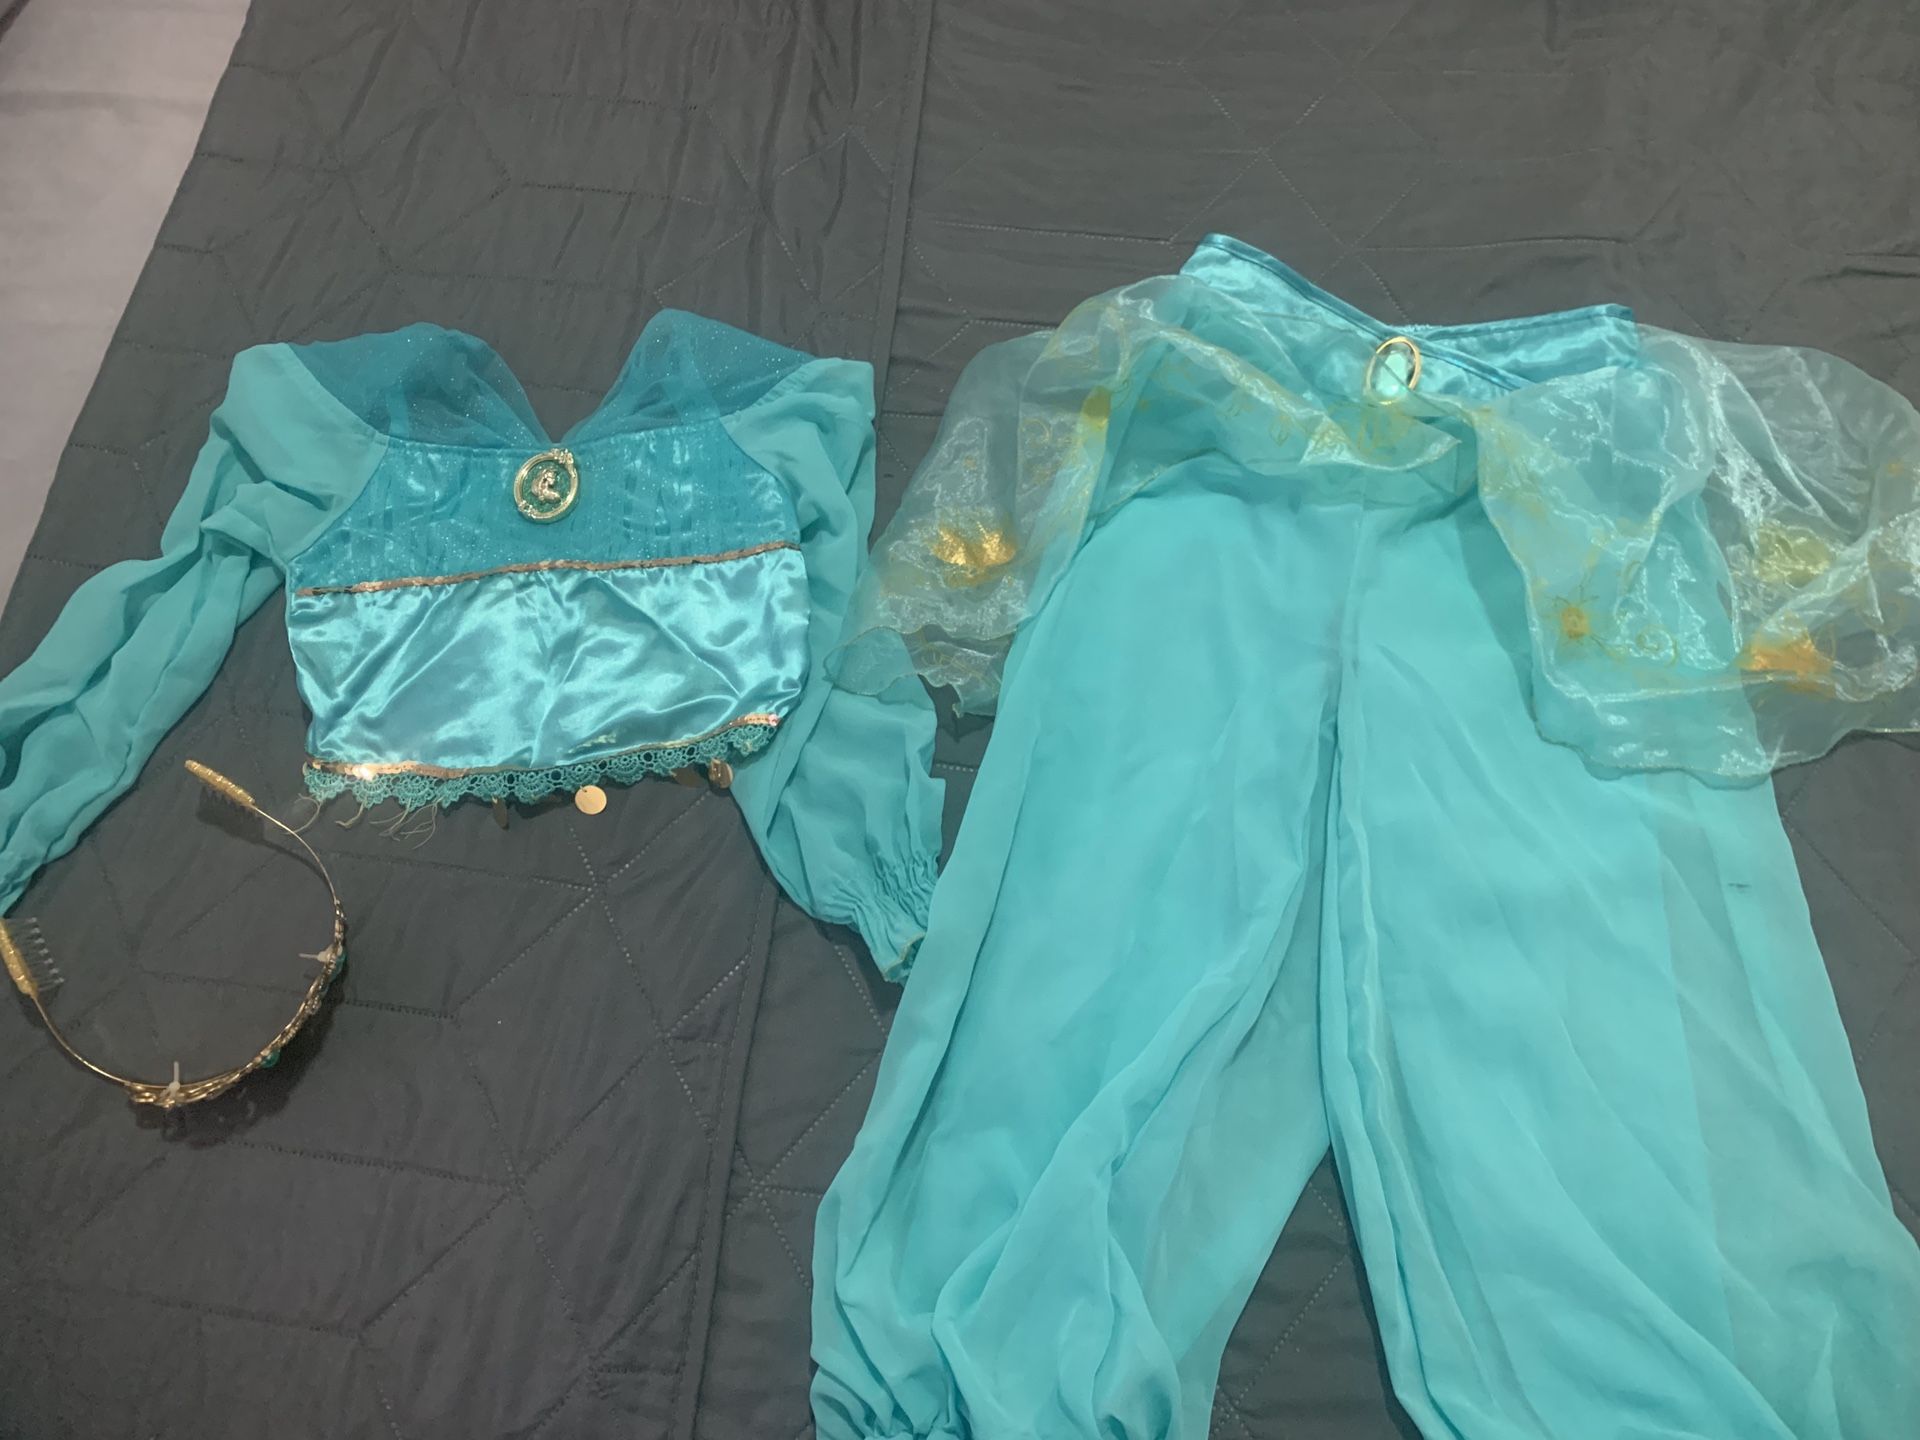 Jasmine costume for girl size 5-6